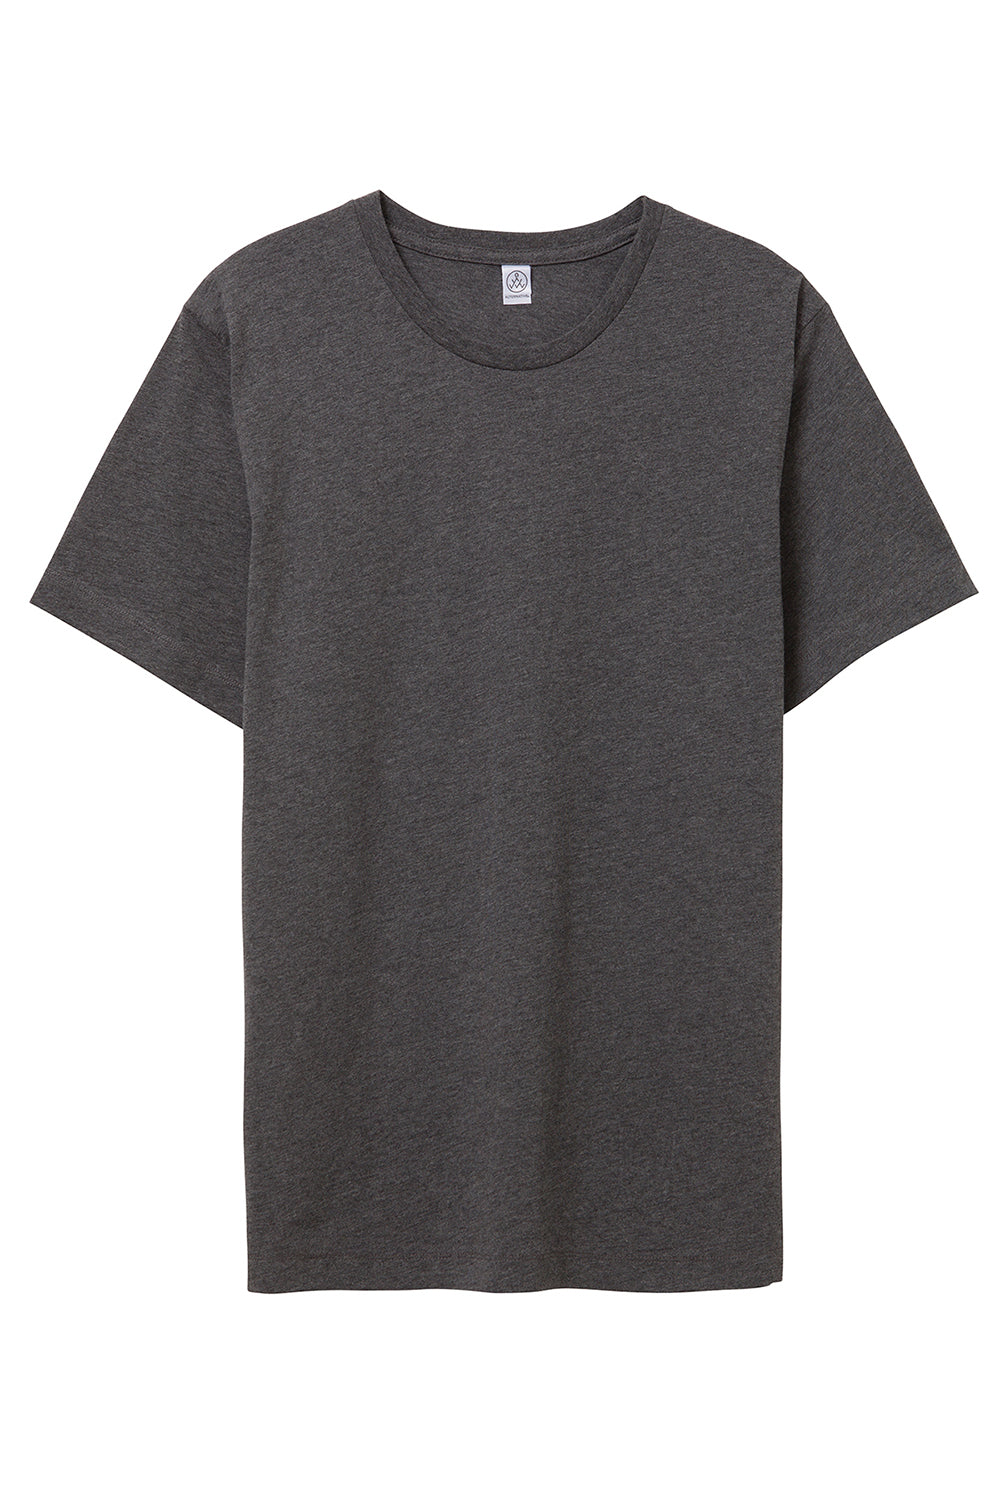 Alternative AA1070/1070 Mens Go To Jersey Short Sleeve Crewneck T-Shirt Heather Dark Grey Flat Front